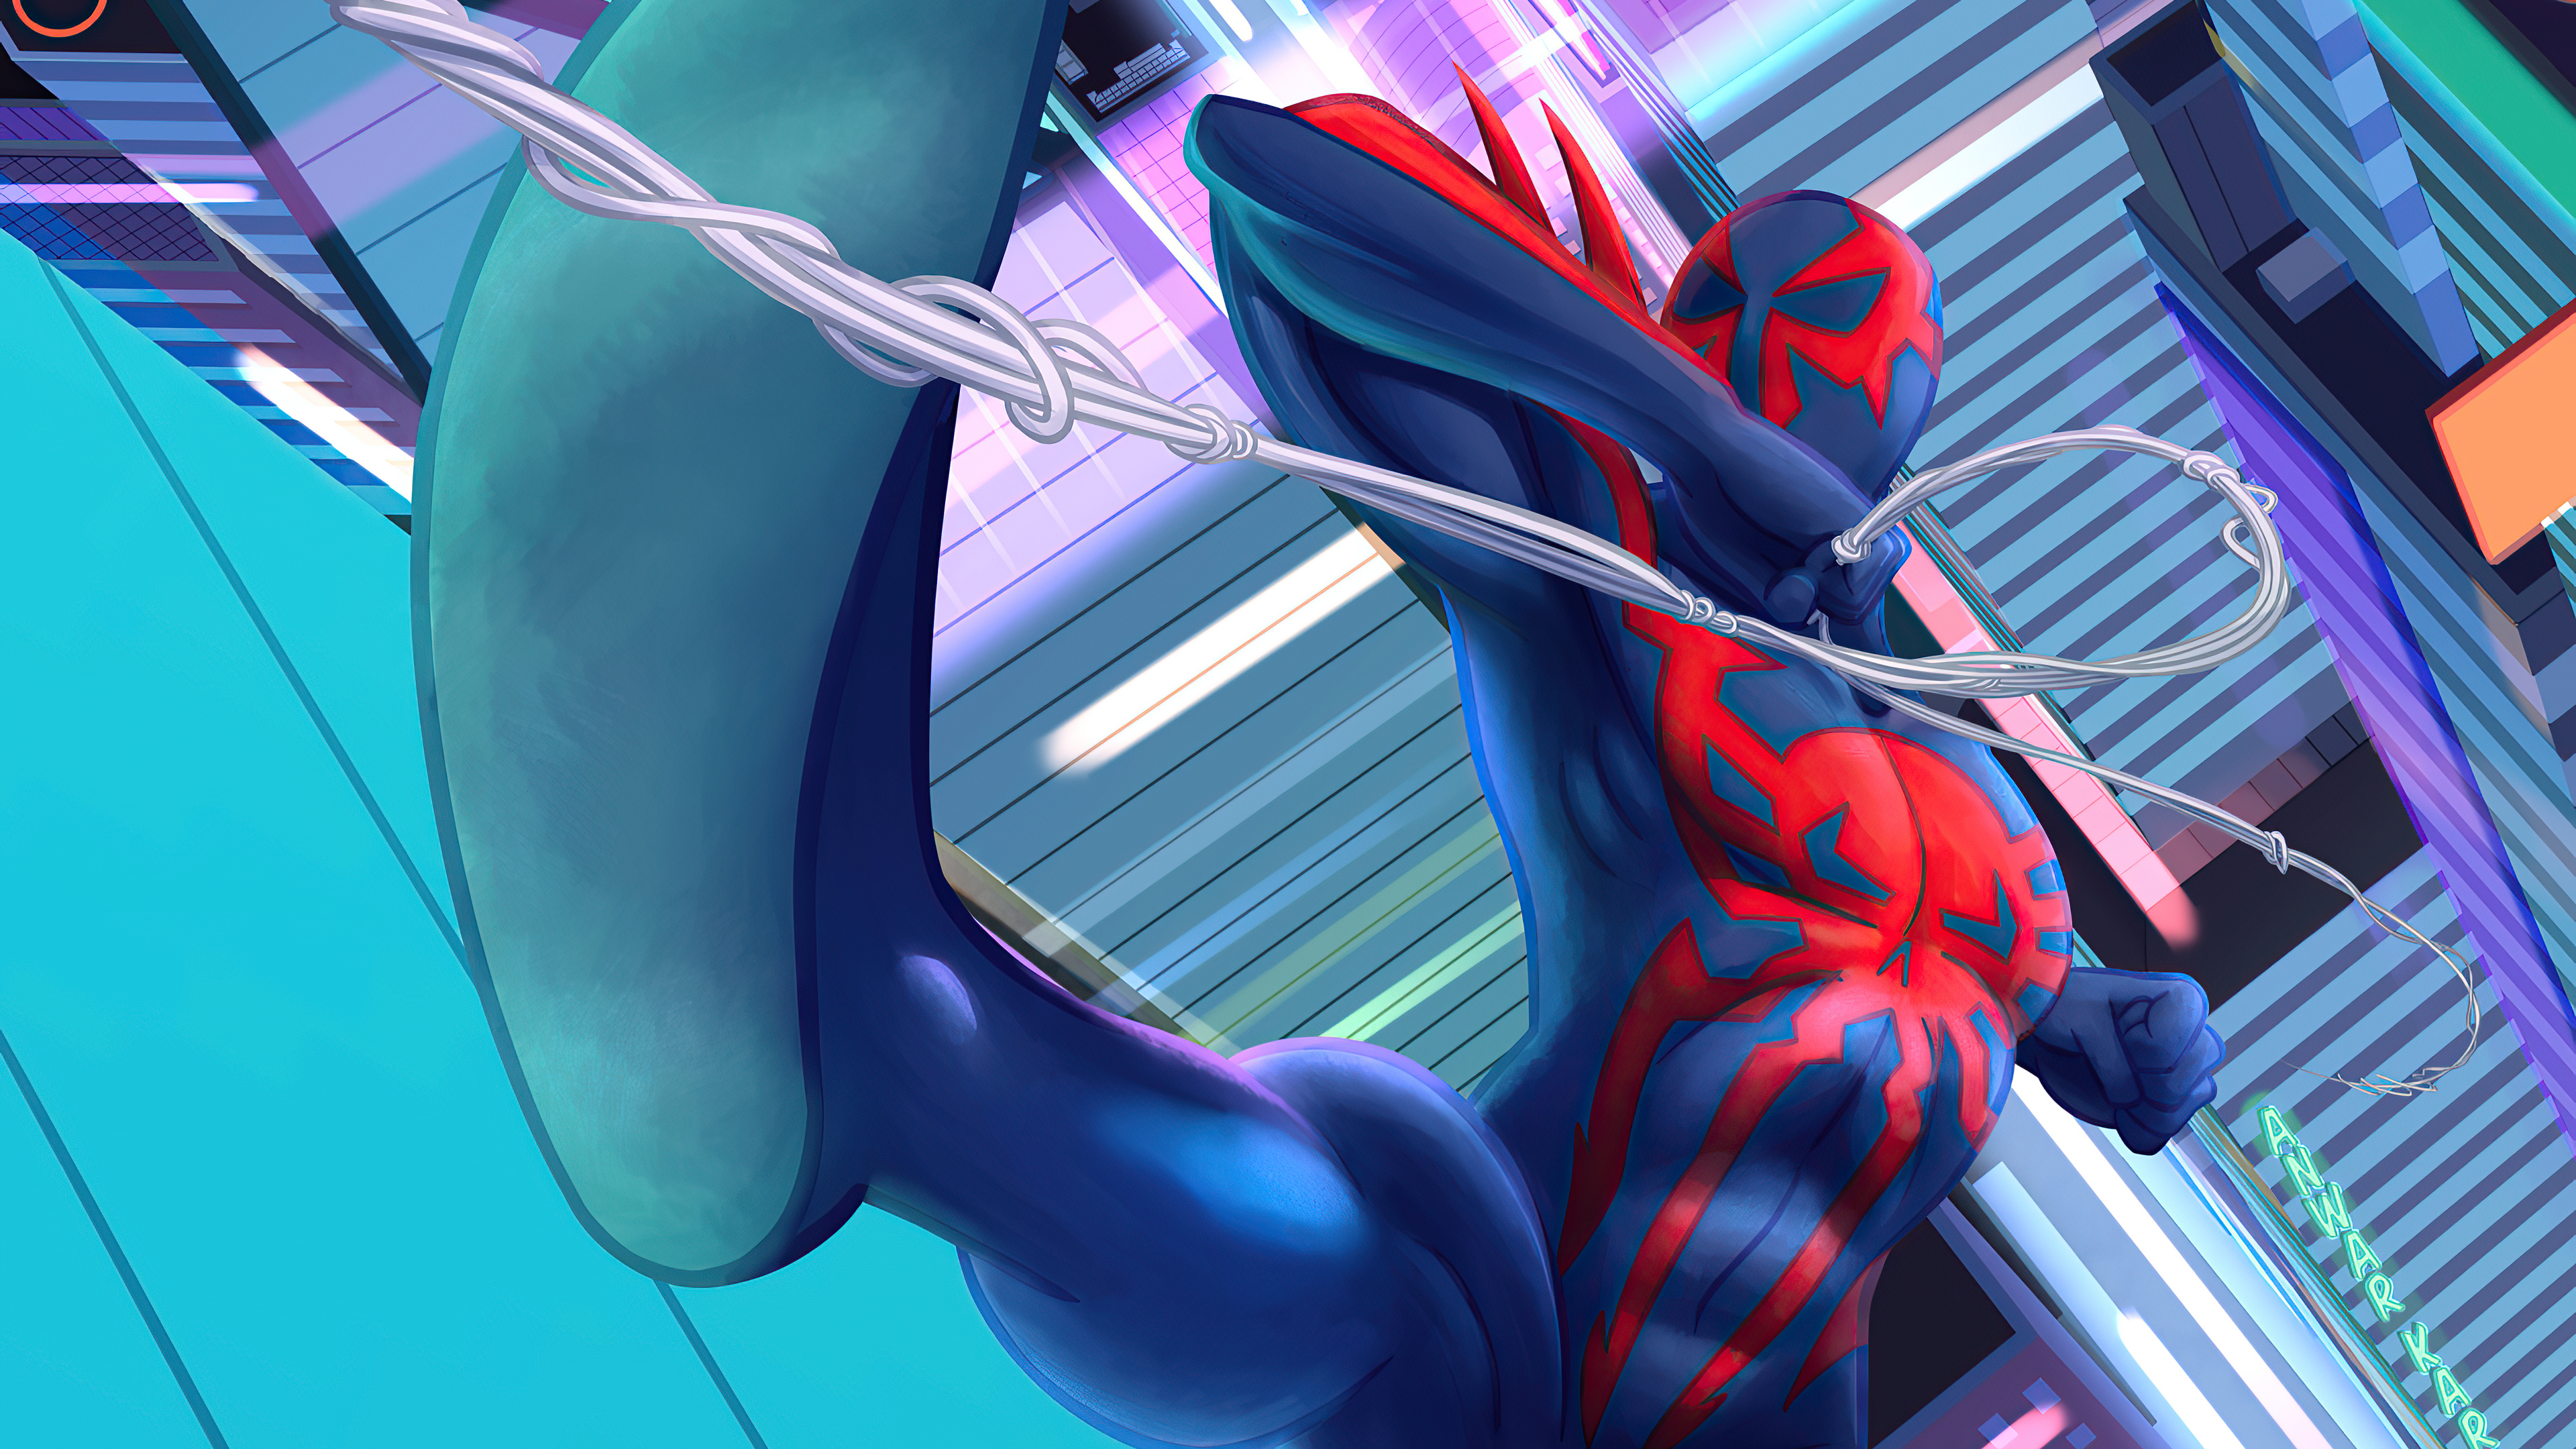 Comics Spider-Man 4k Ultra HD Wallpaper by Anwar Karim